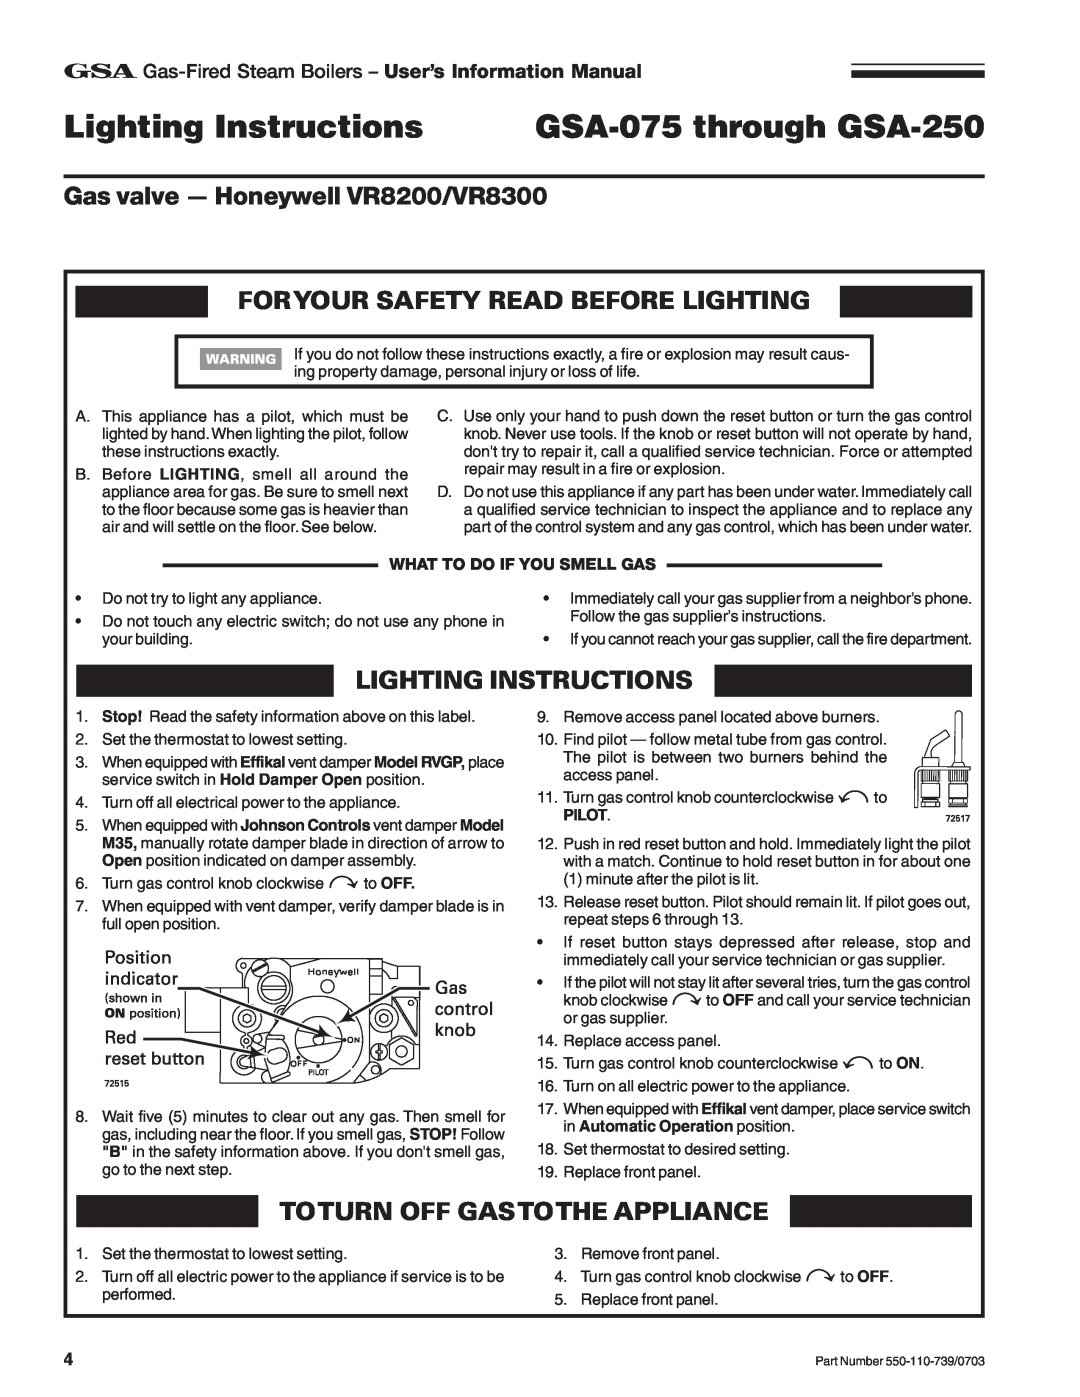 Honeywell RVGP manual Lighting Instructions GSA-075 through GSA-250, Gas valve - Honeywell VR8200/VR8300, Pilot 